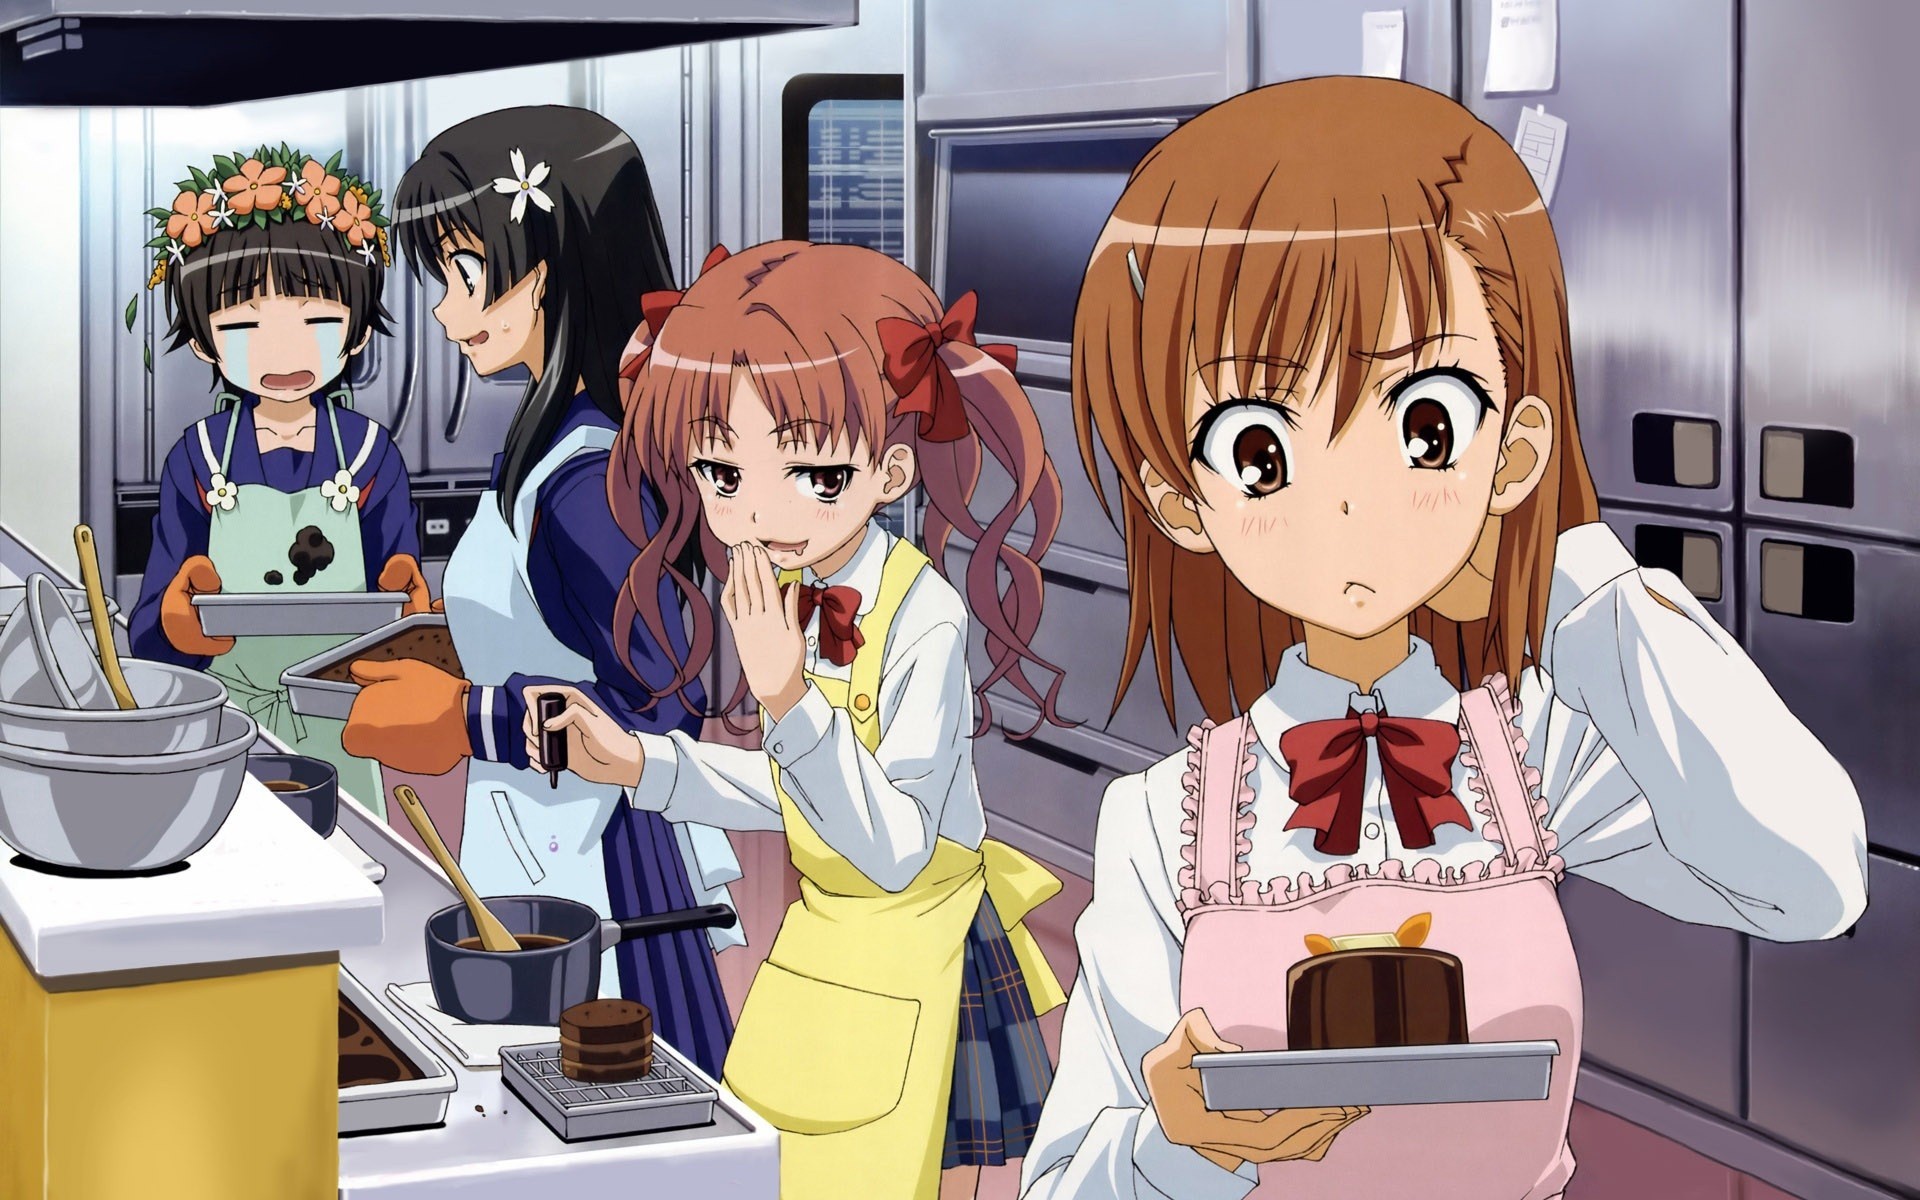 Baking Anime | Anime-Planet